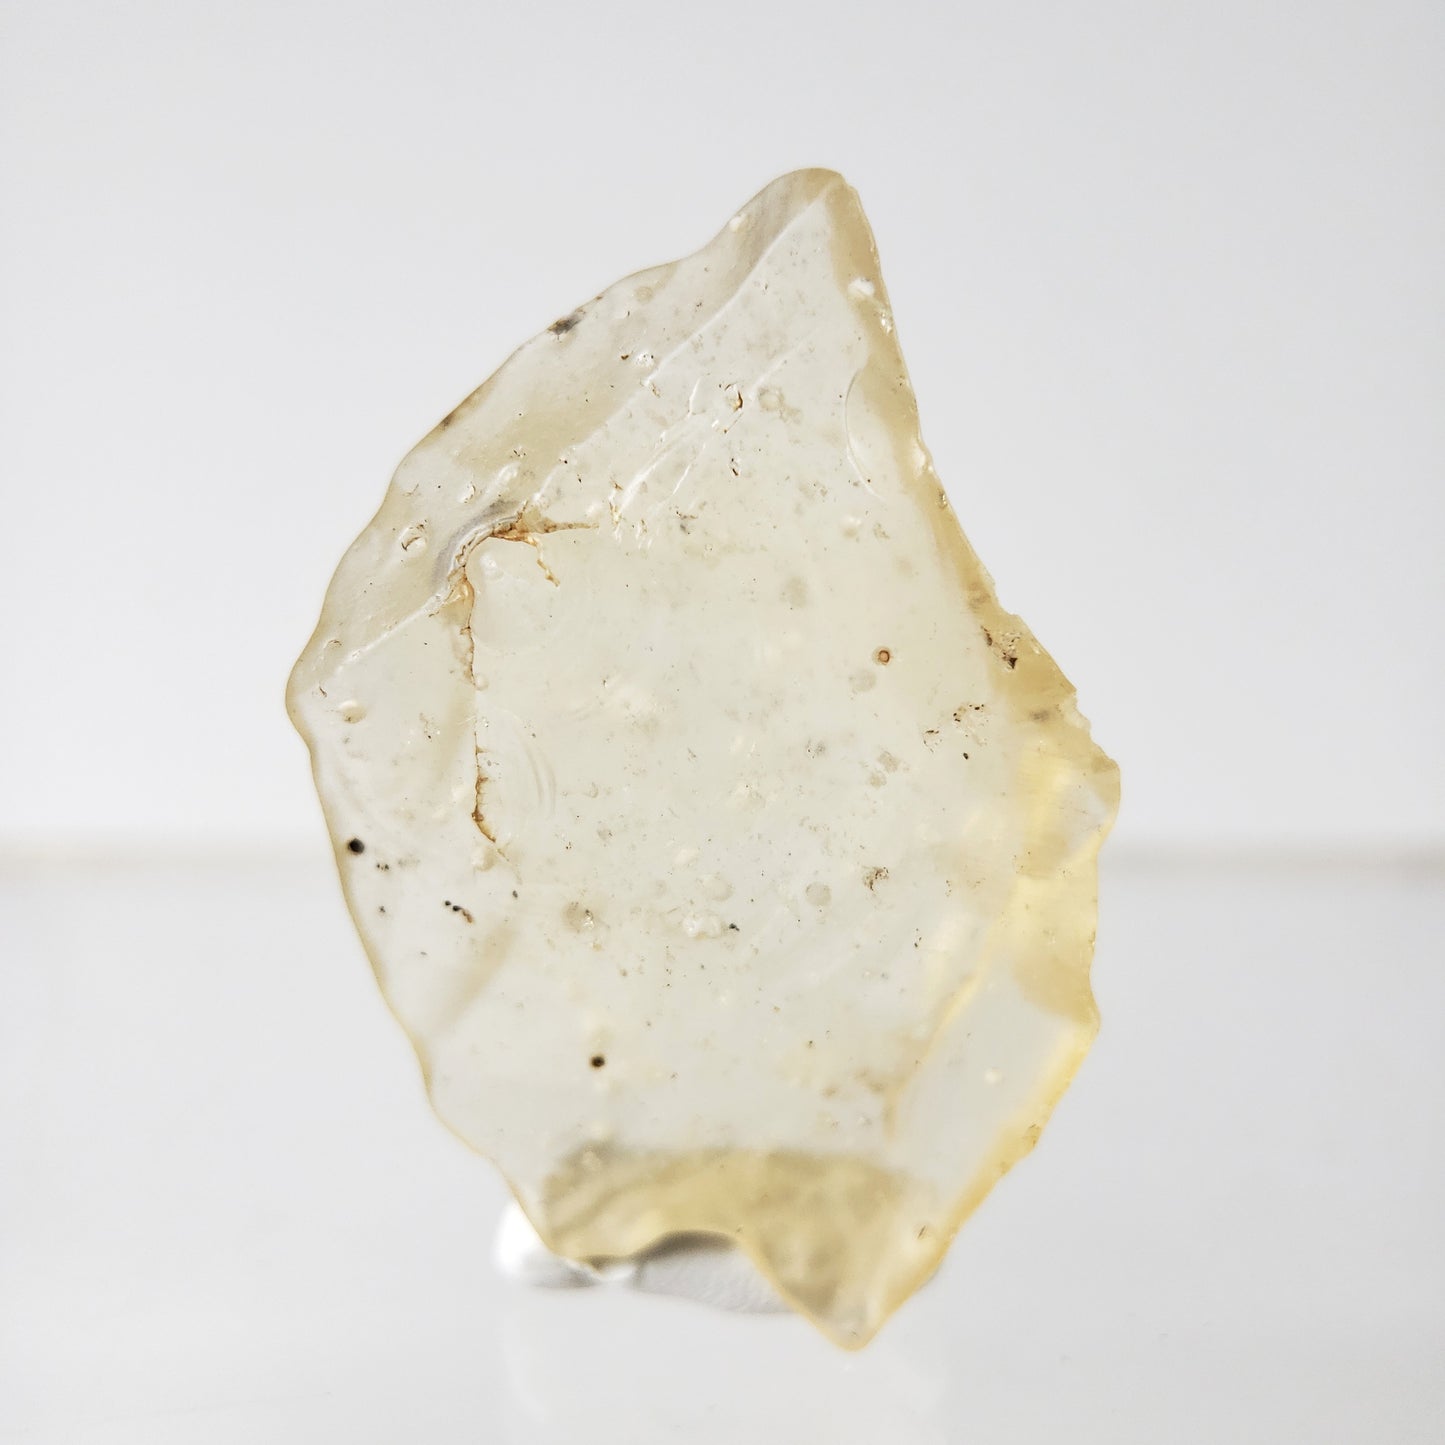 Libyan Desert Glass 利比亞黃金隕石 13.56g